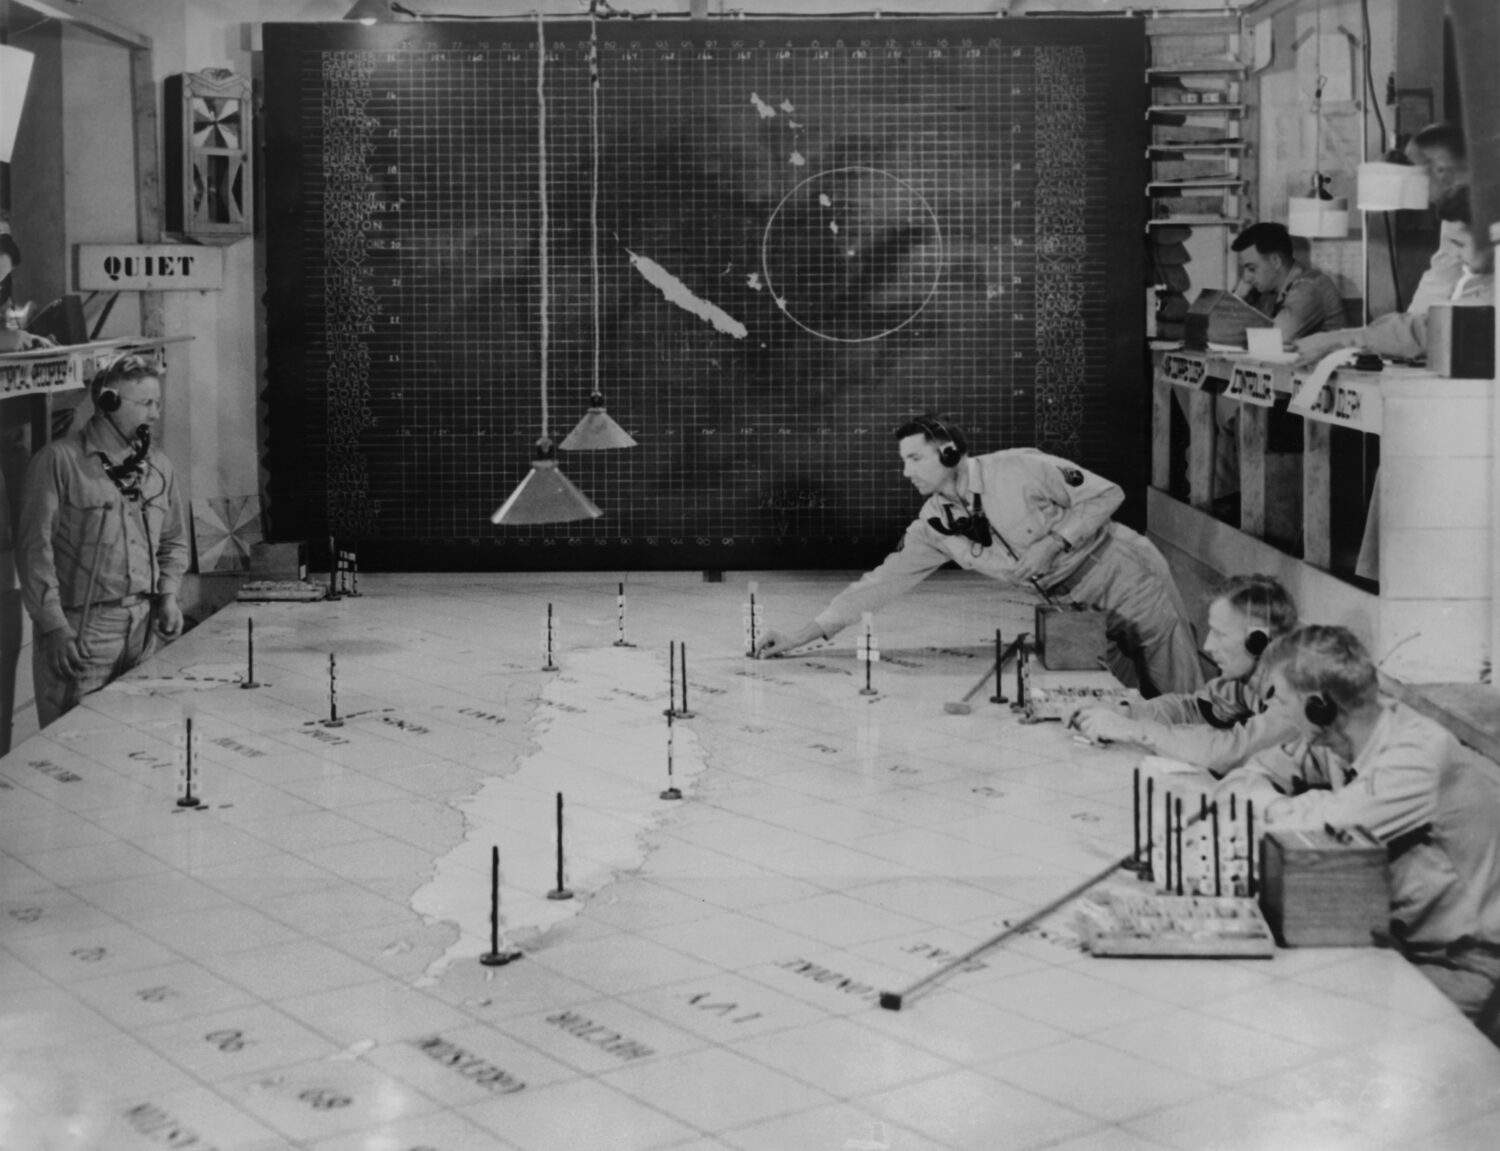 U.S. Army Signal Corps using radar plotting board. They track aircraft at 1st Island Command Headquarters, Noumea, New Caledonia. 1943.